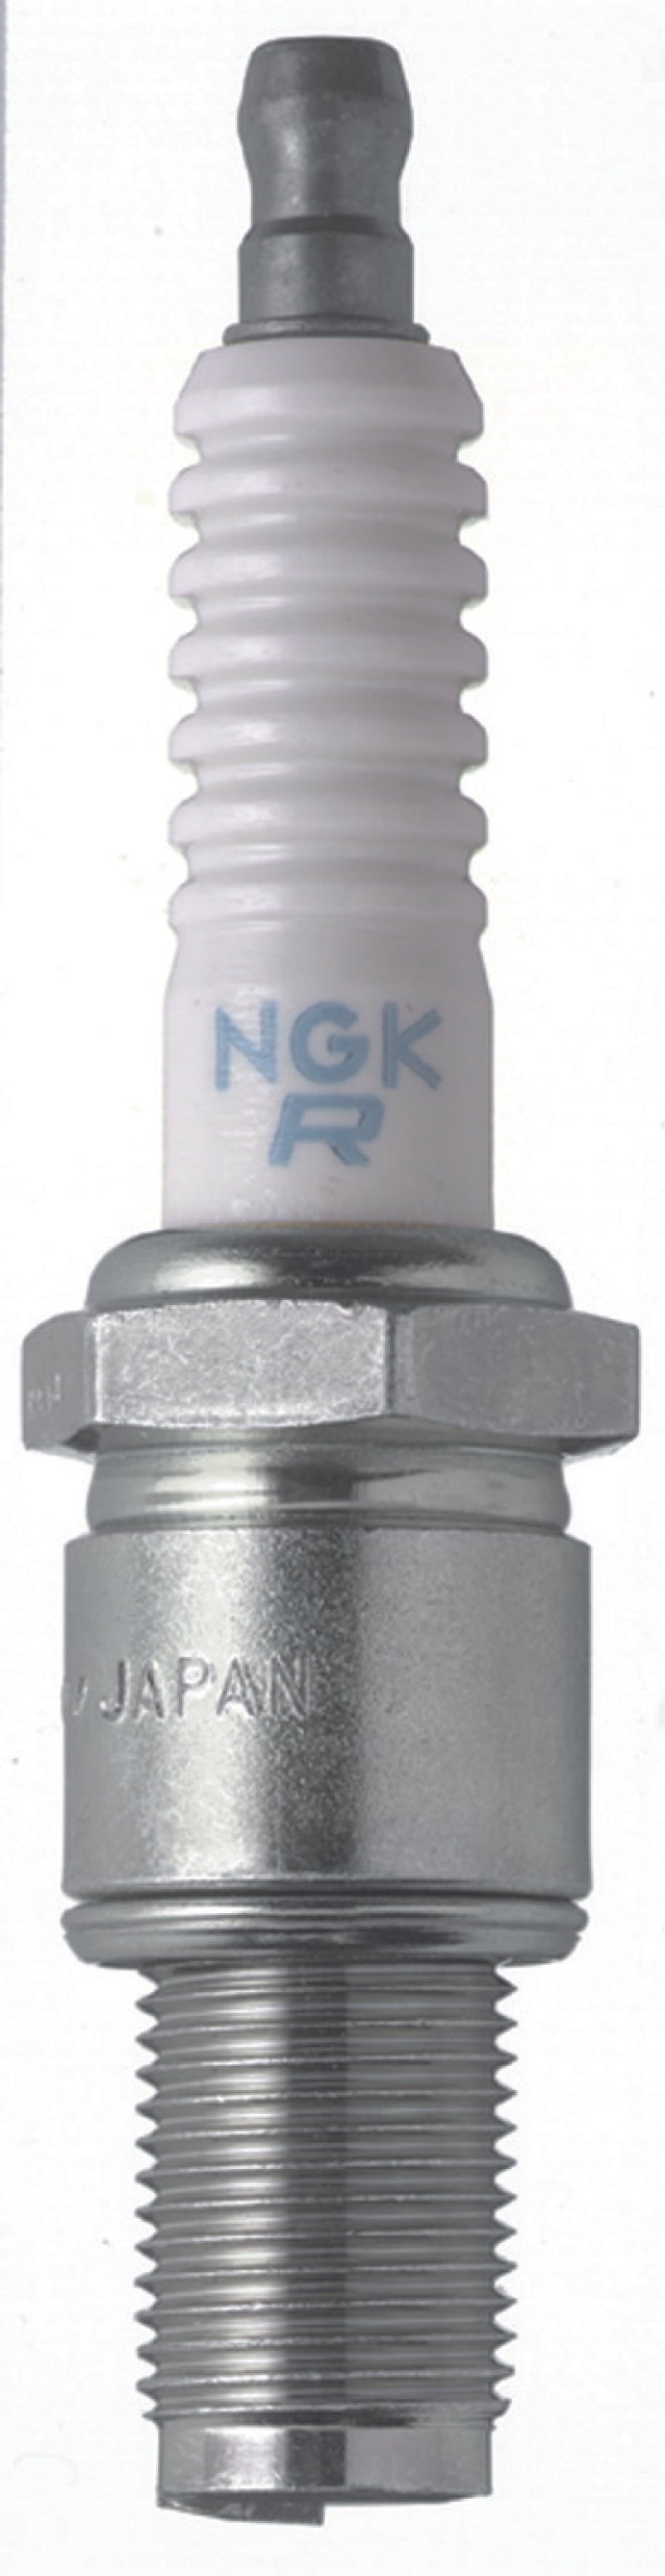 NGK Racing Spark Plug Box of 4 (R6725-115) -  Shop now at Performance Car Parts